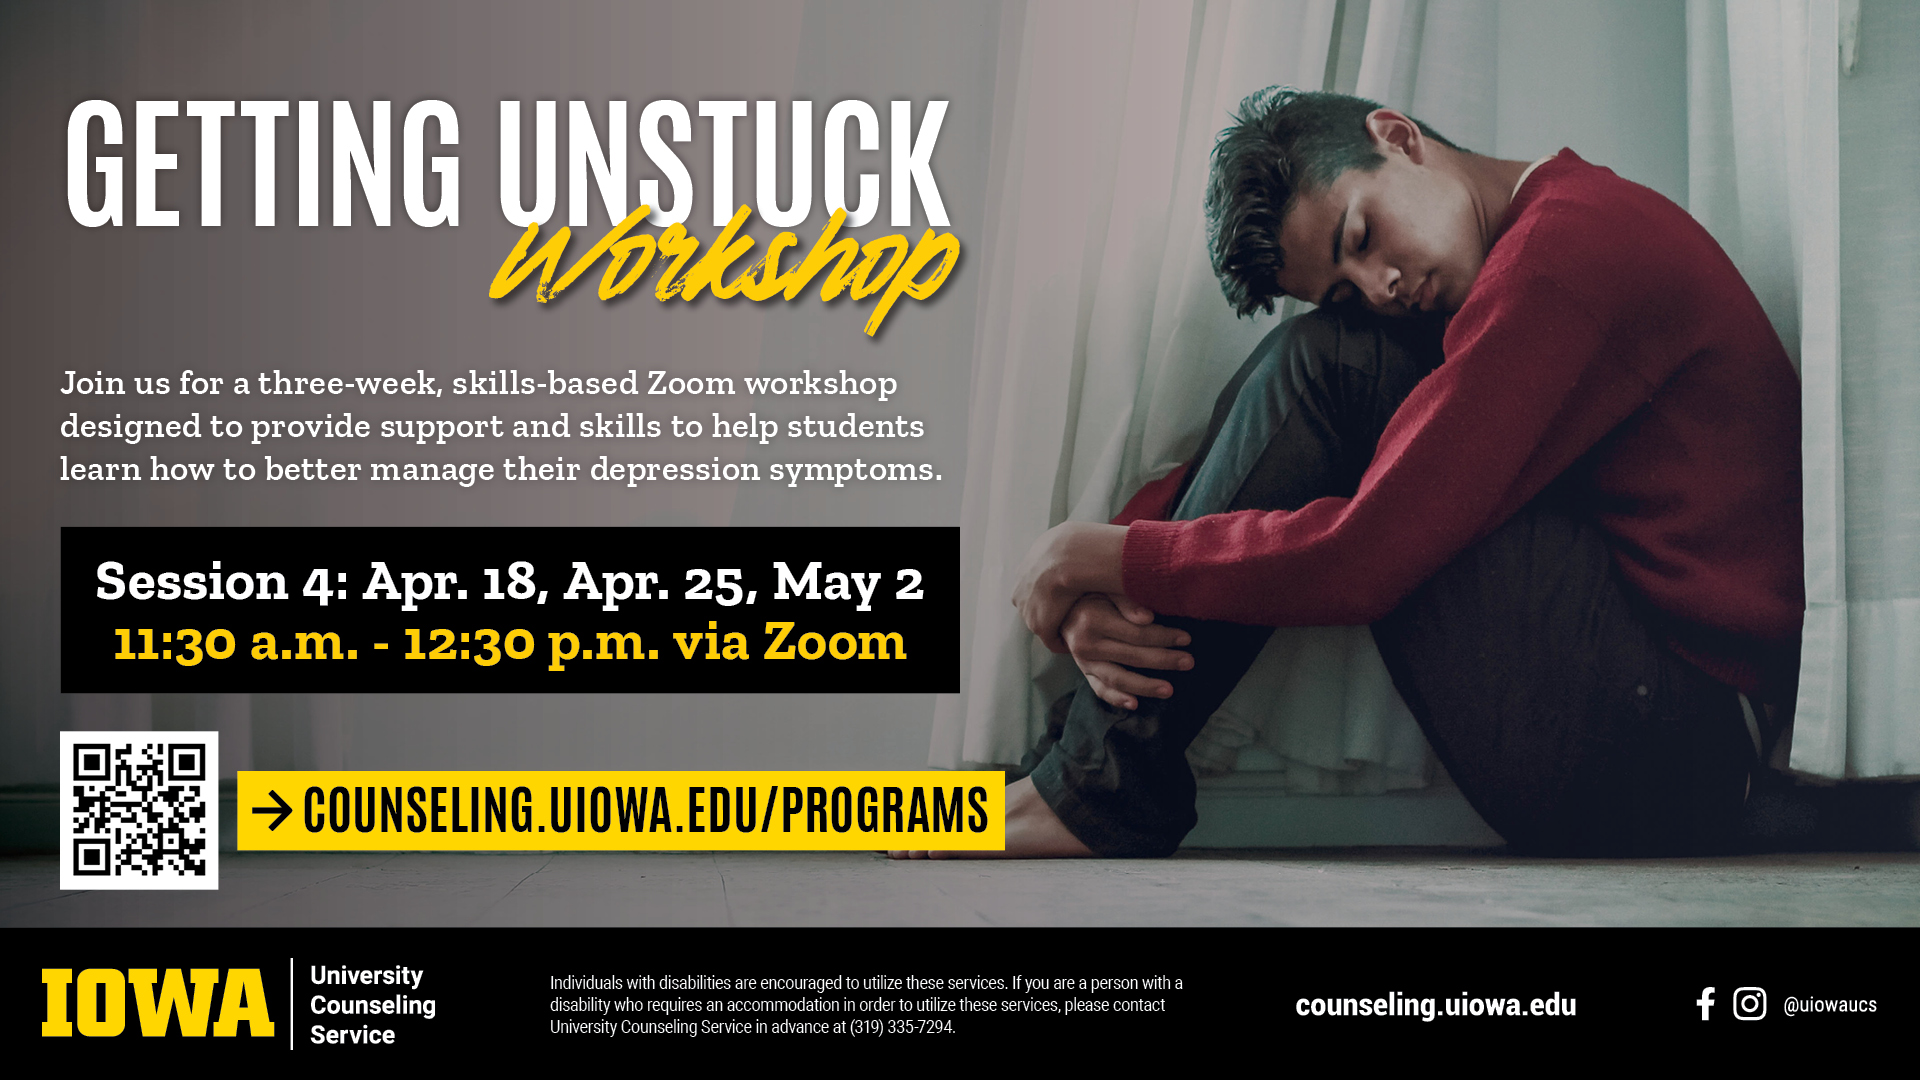 Getting Unstuck Workshop Session 4: April 18, April 25, May 2 11:30am-12:30pm via zoom